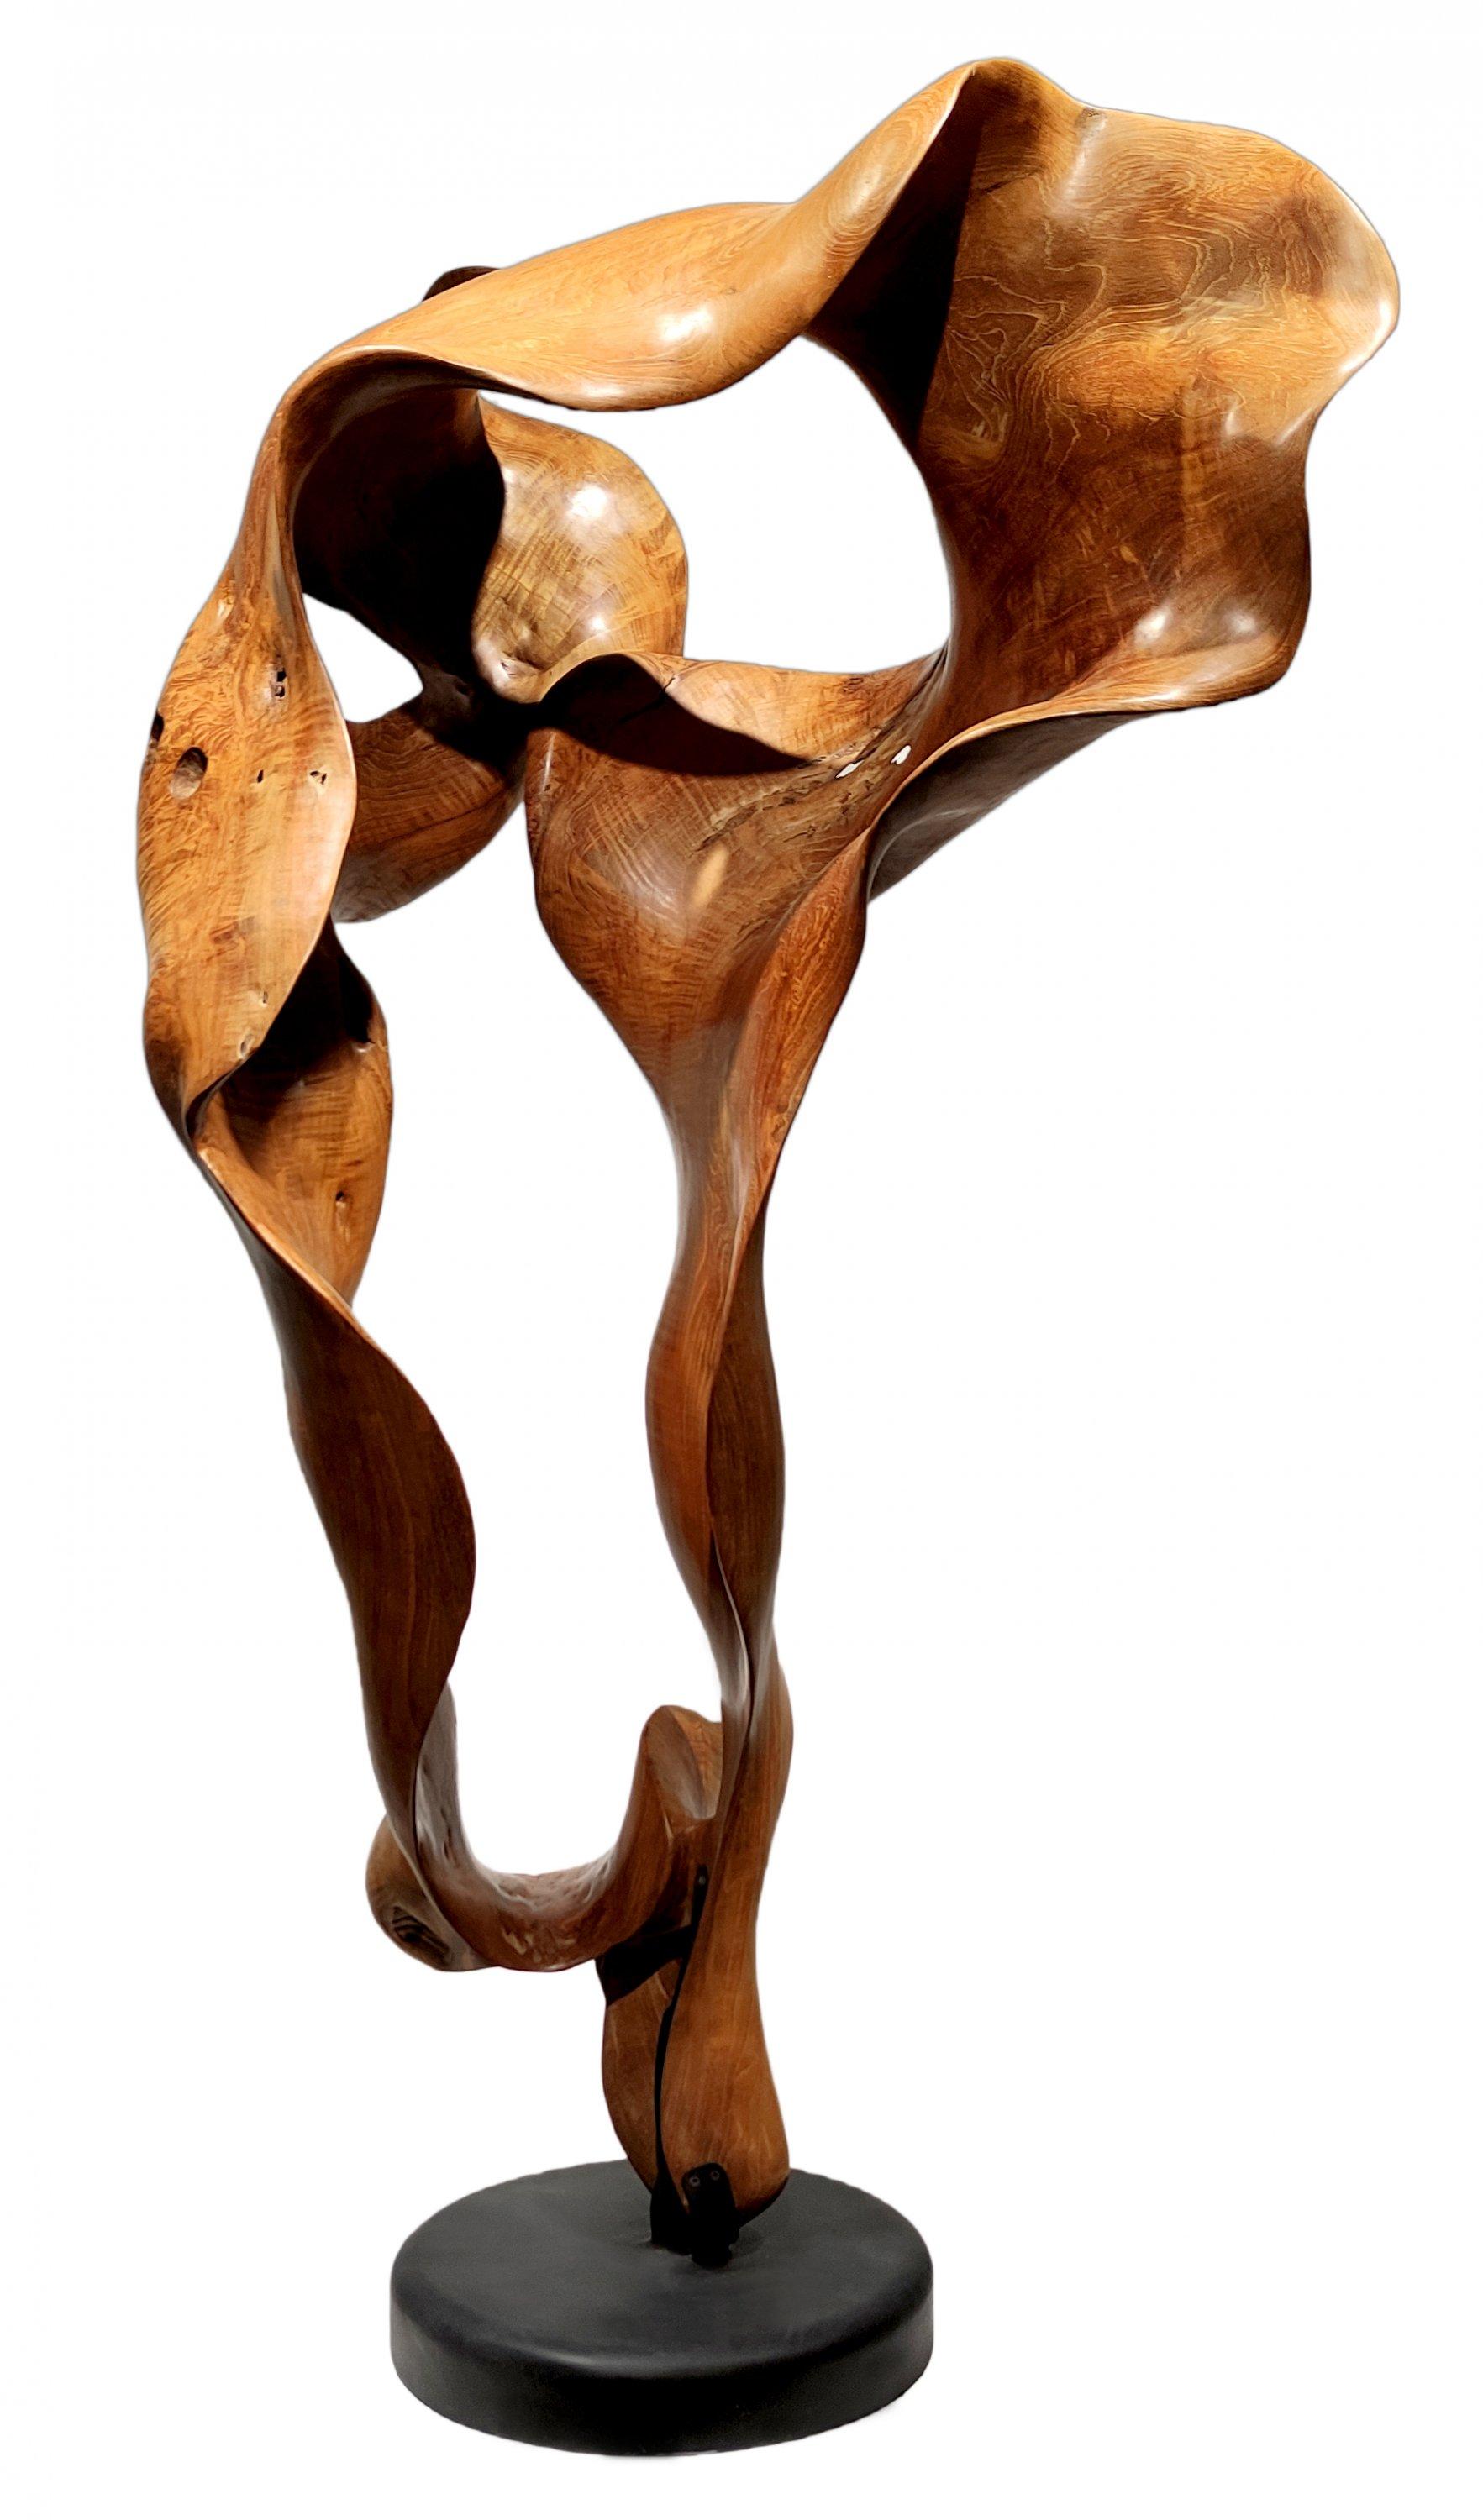 Abstrakte Skulptur, Mahagoniwurzel, Holz, 21. Jahrhundert, Zeitgenössisch